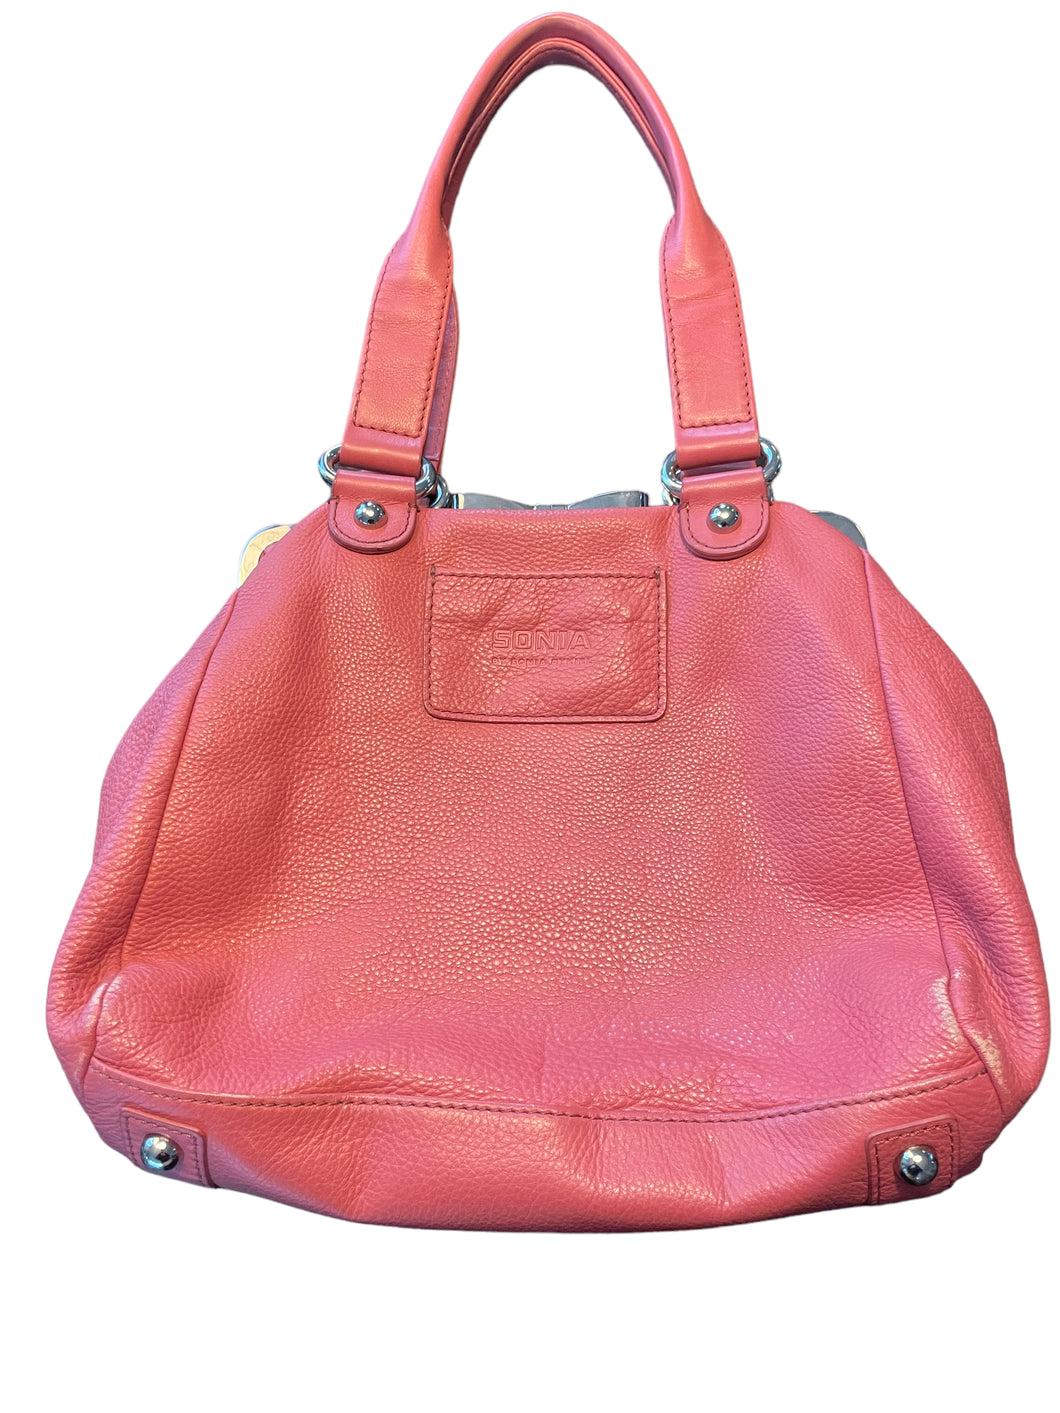 Sonia Rykiel pink bag